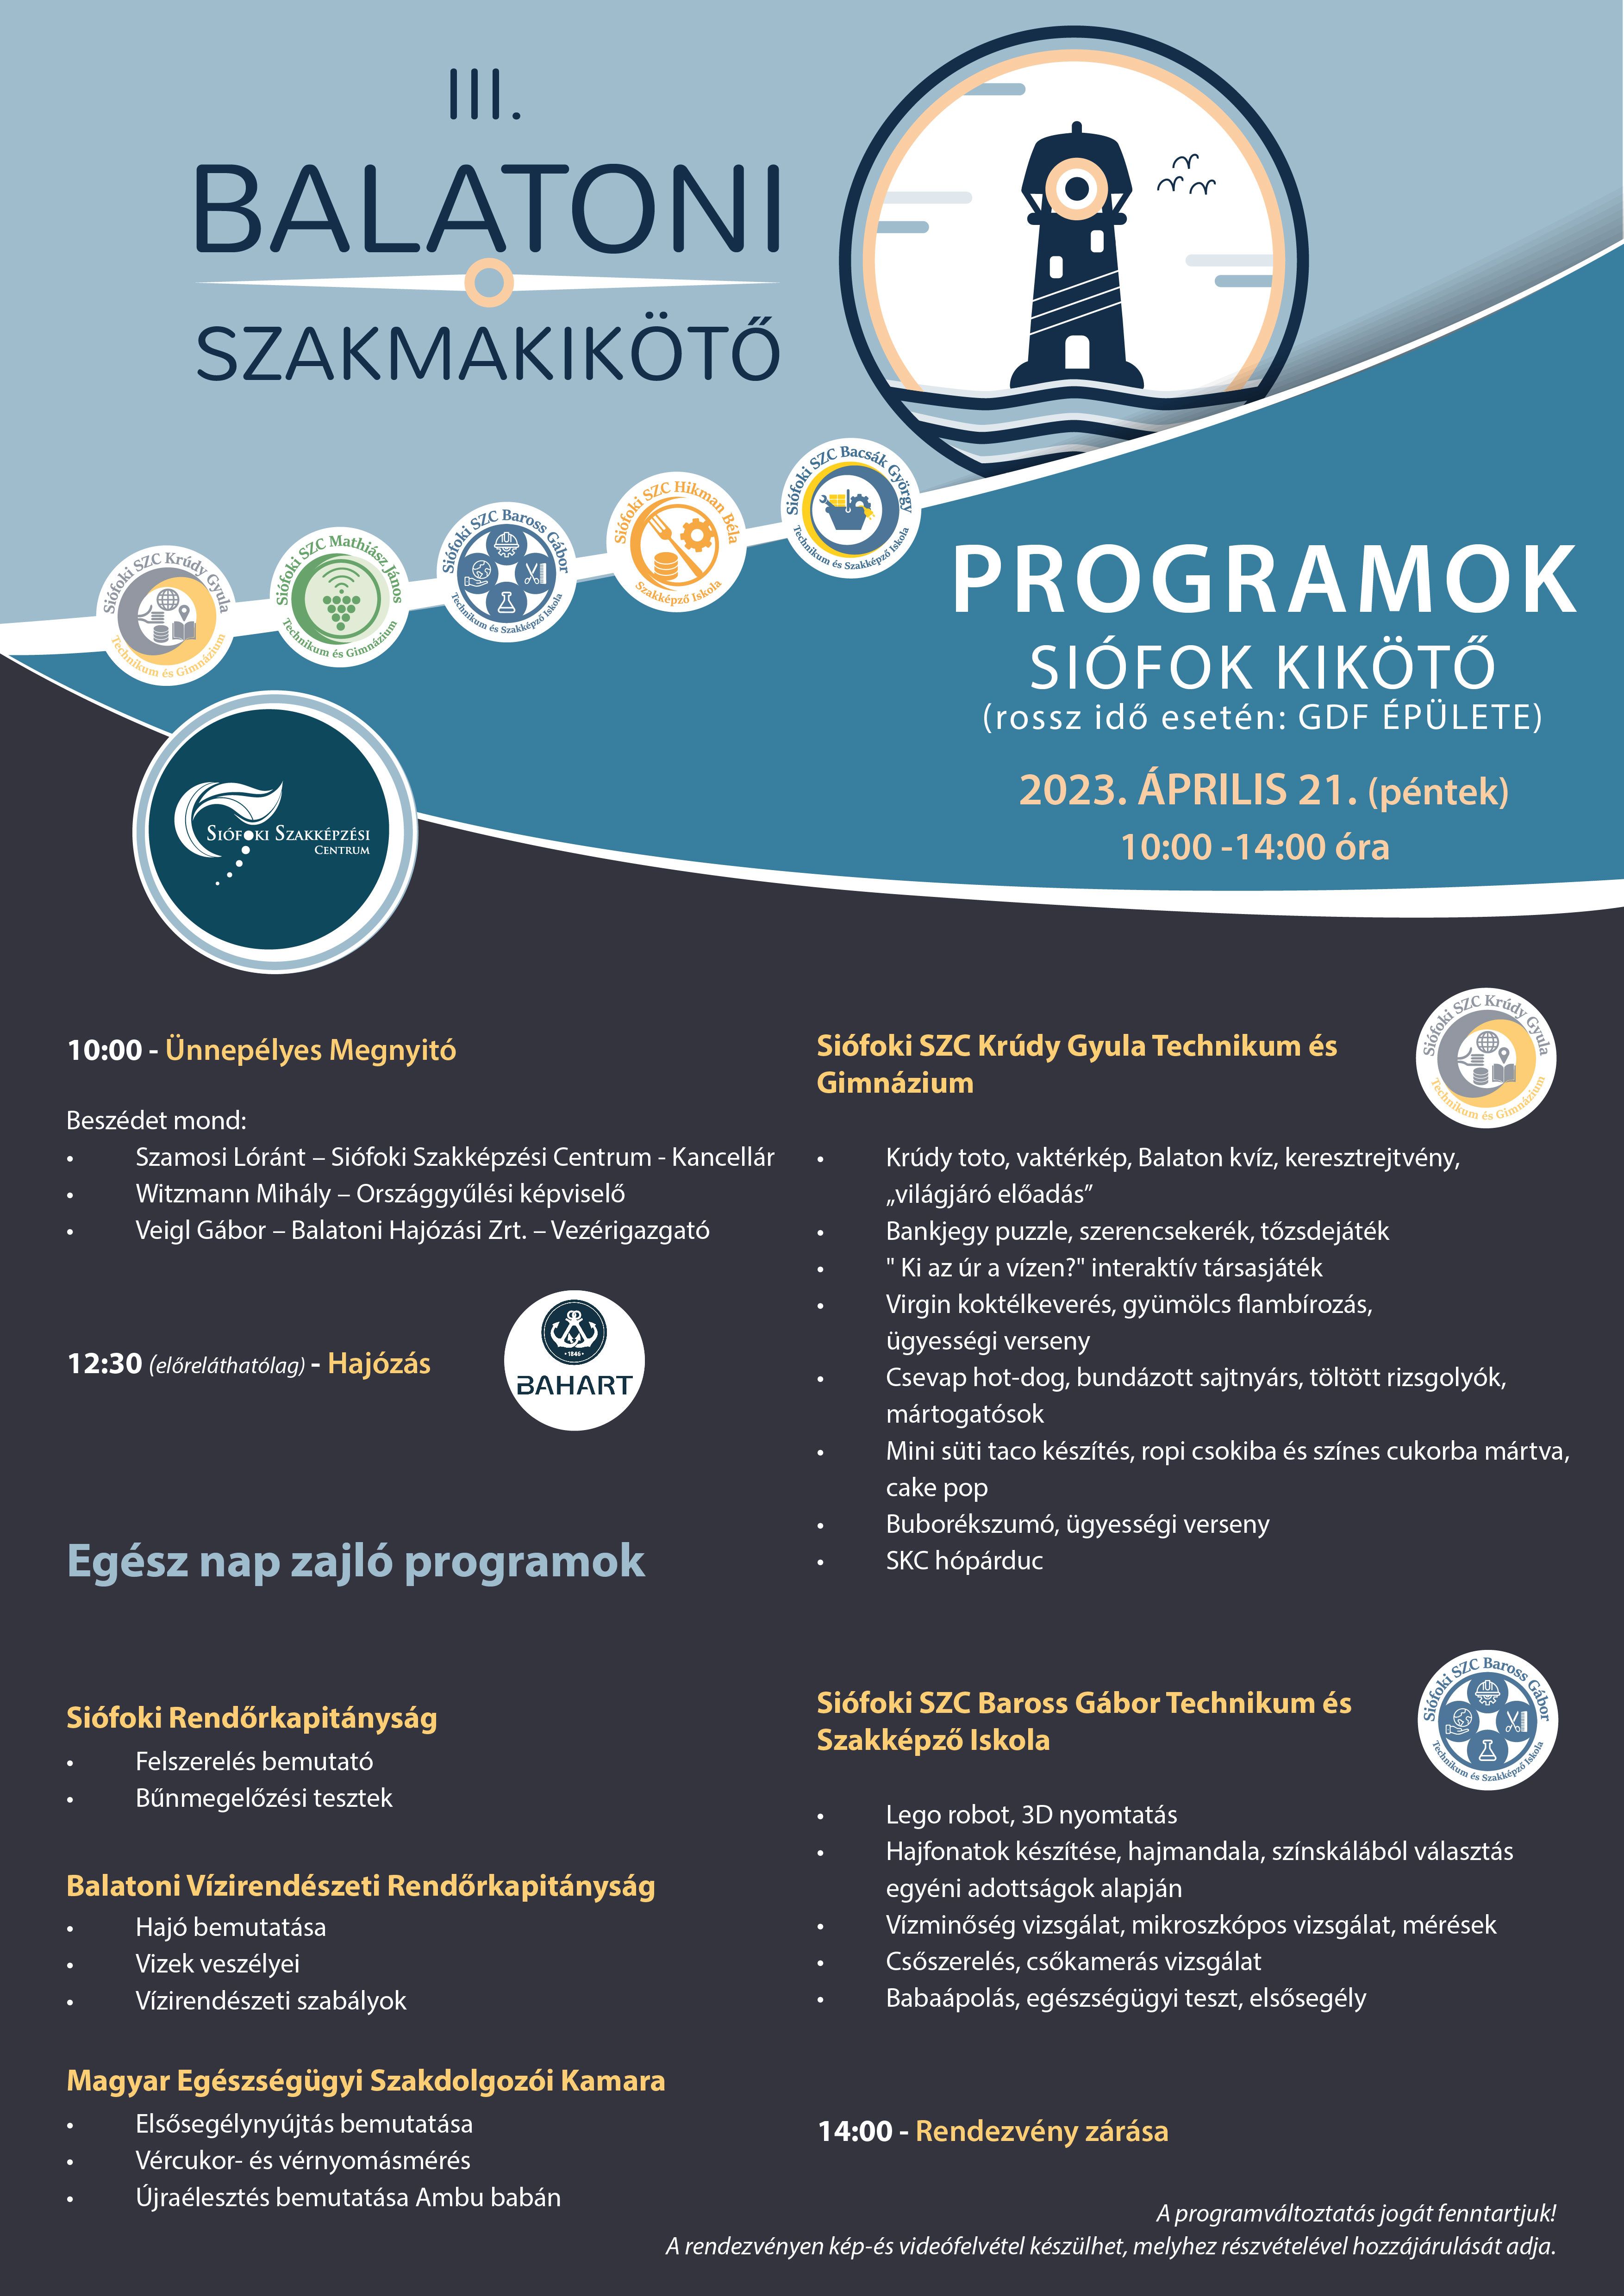 III. Balatoni Szakmakikötő - Siófok: Programok